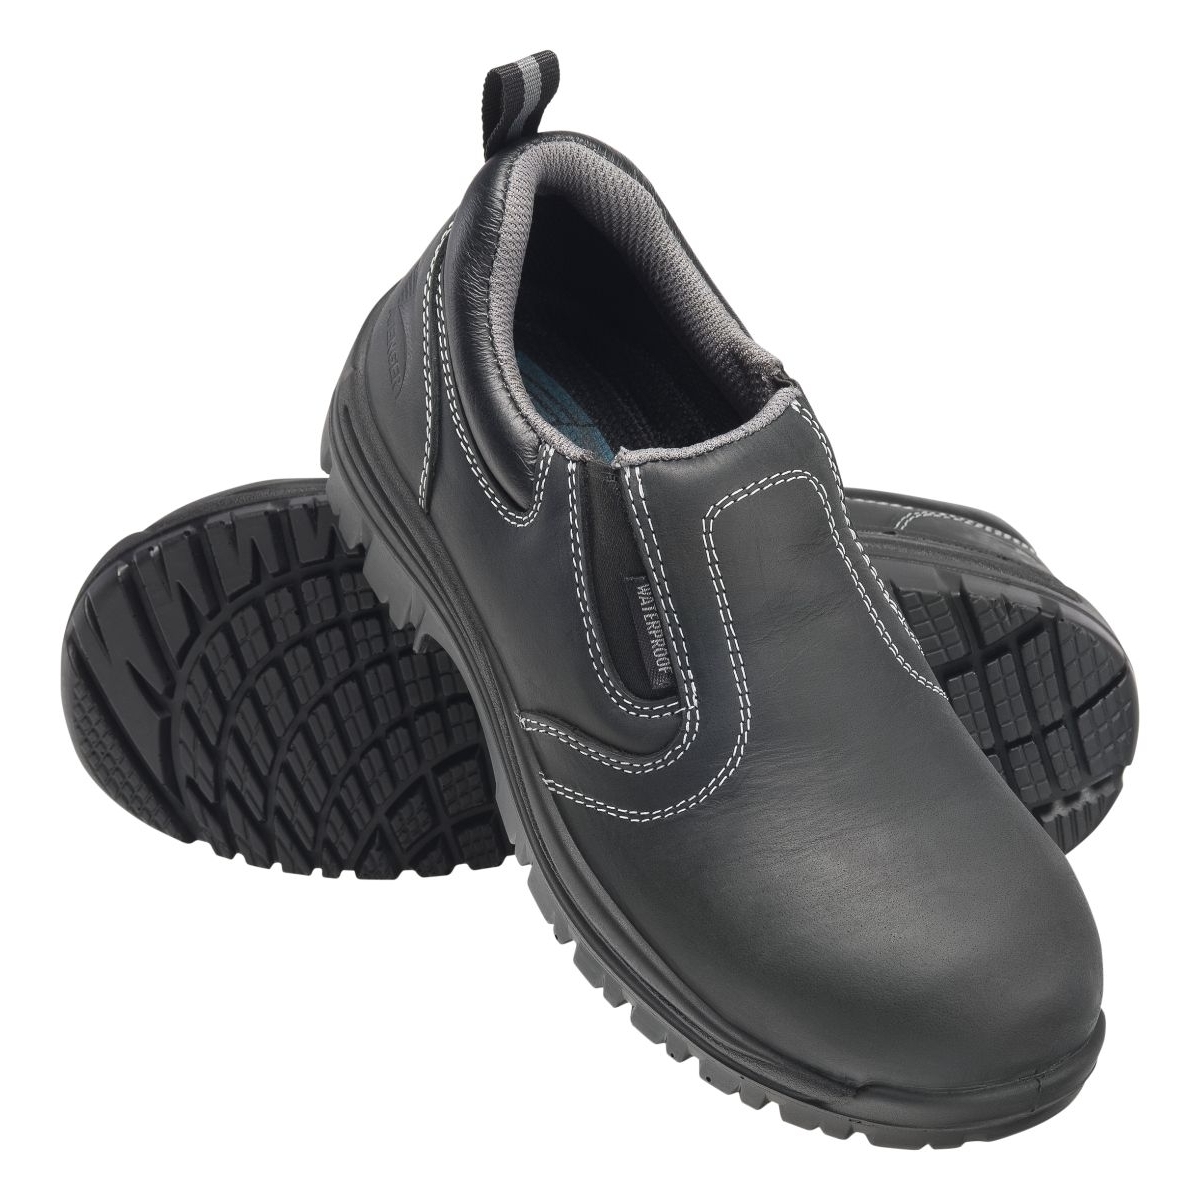 FSI FOOTWEAR SPECIALTIES INTERNATIONAL NAUTILUS Avenger Women's Foreman Slip-On Composite Toe PR Work Shoes Black - A7169 - BLACK, 9-M